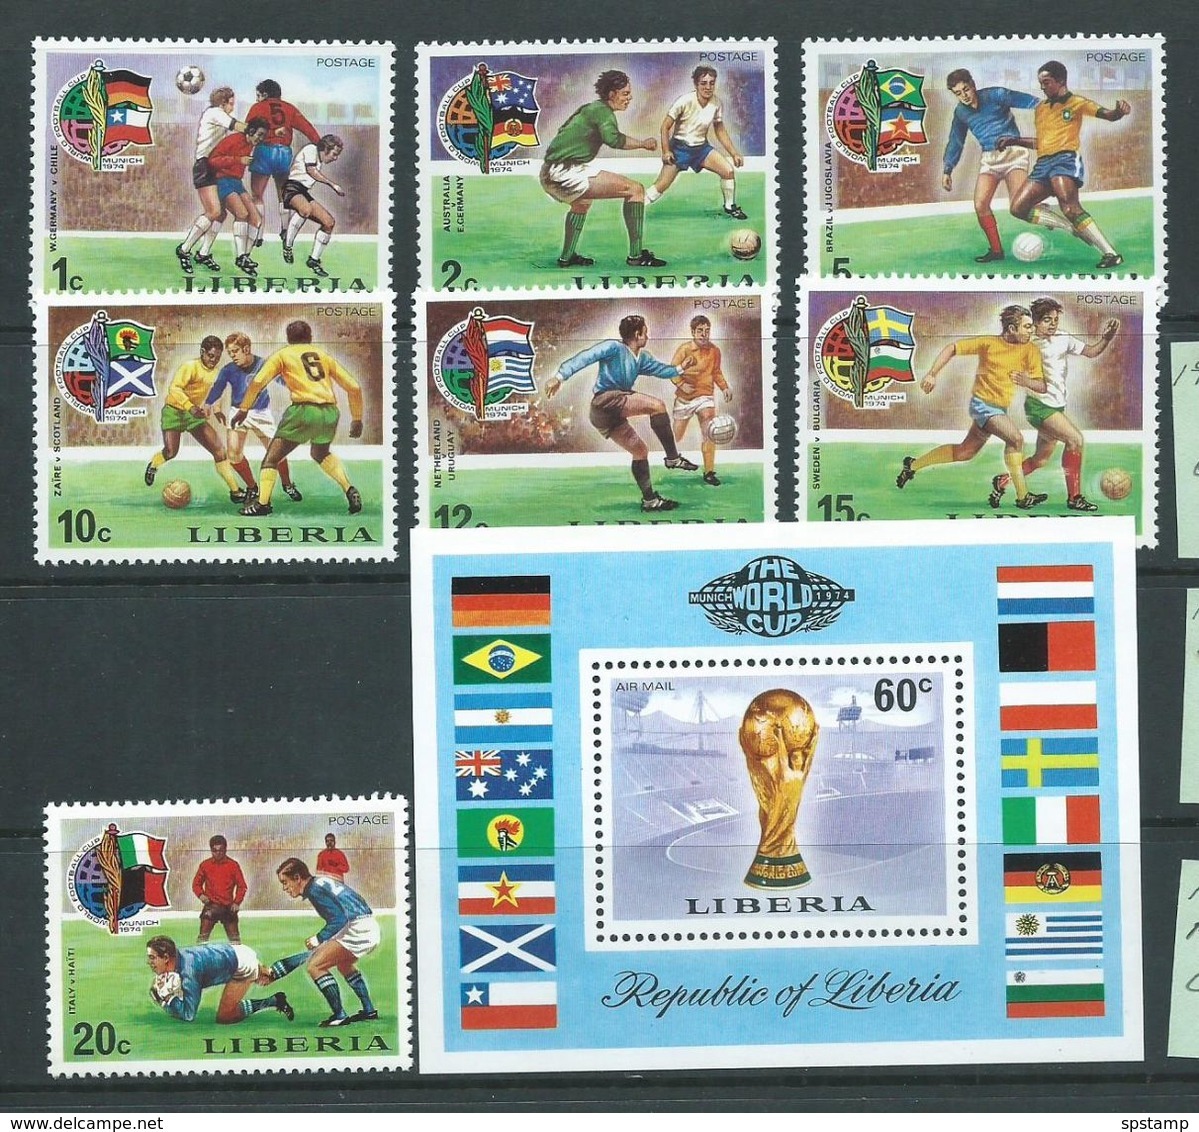 Liberia 1974 Munich Soccer World Cup Set 7 & Miniature Sheet MNH - 1974 – West Germany